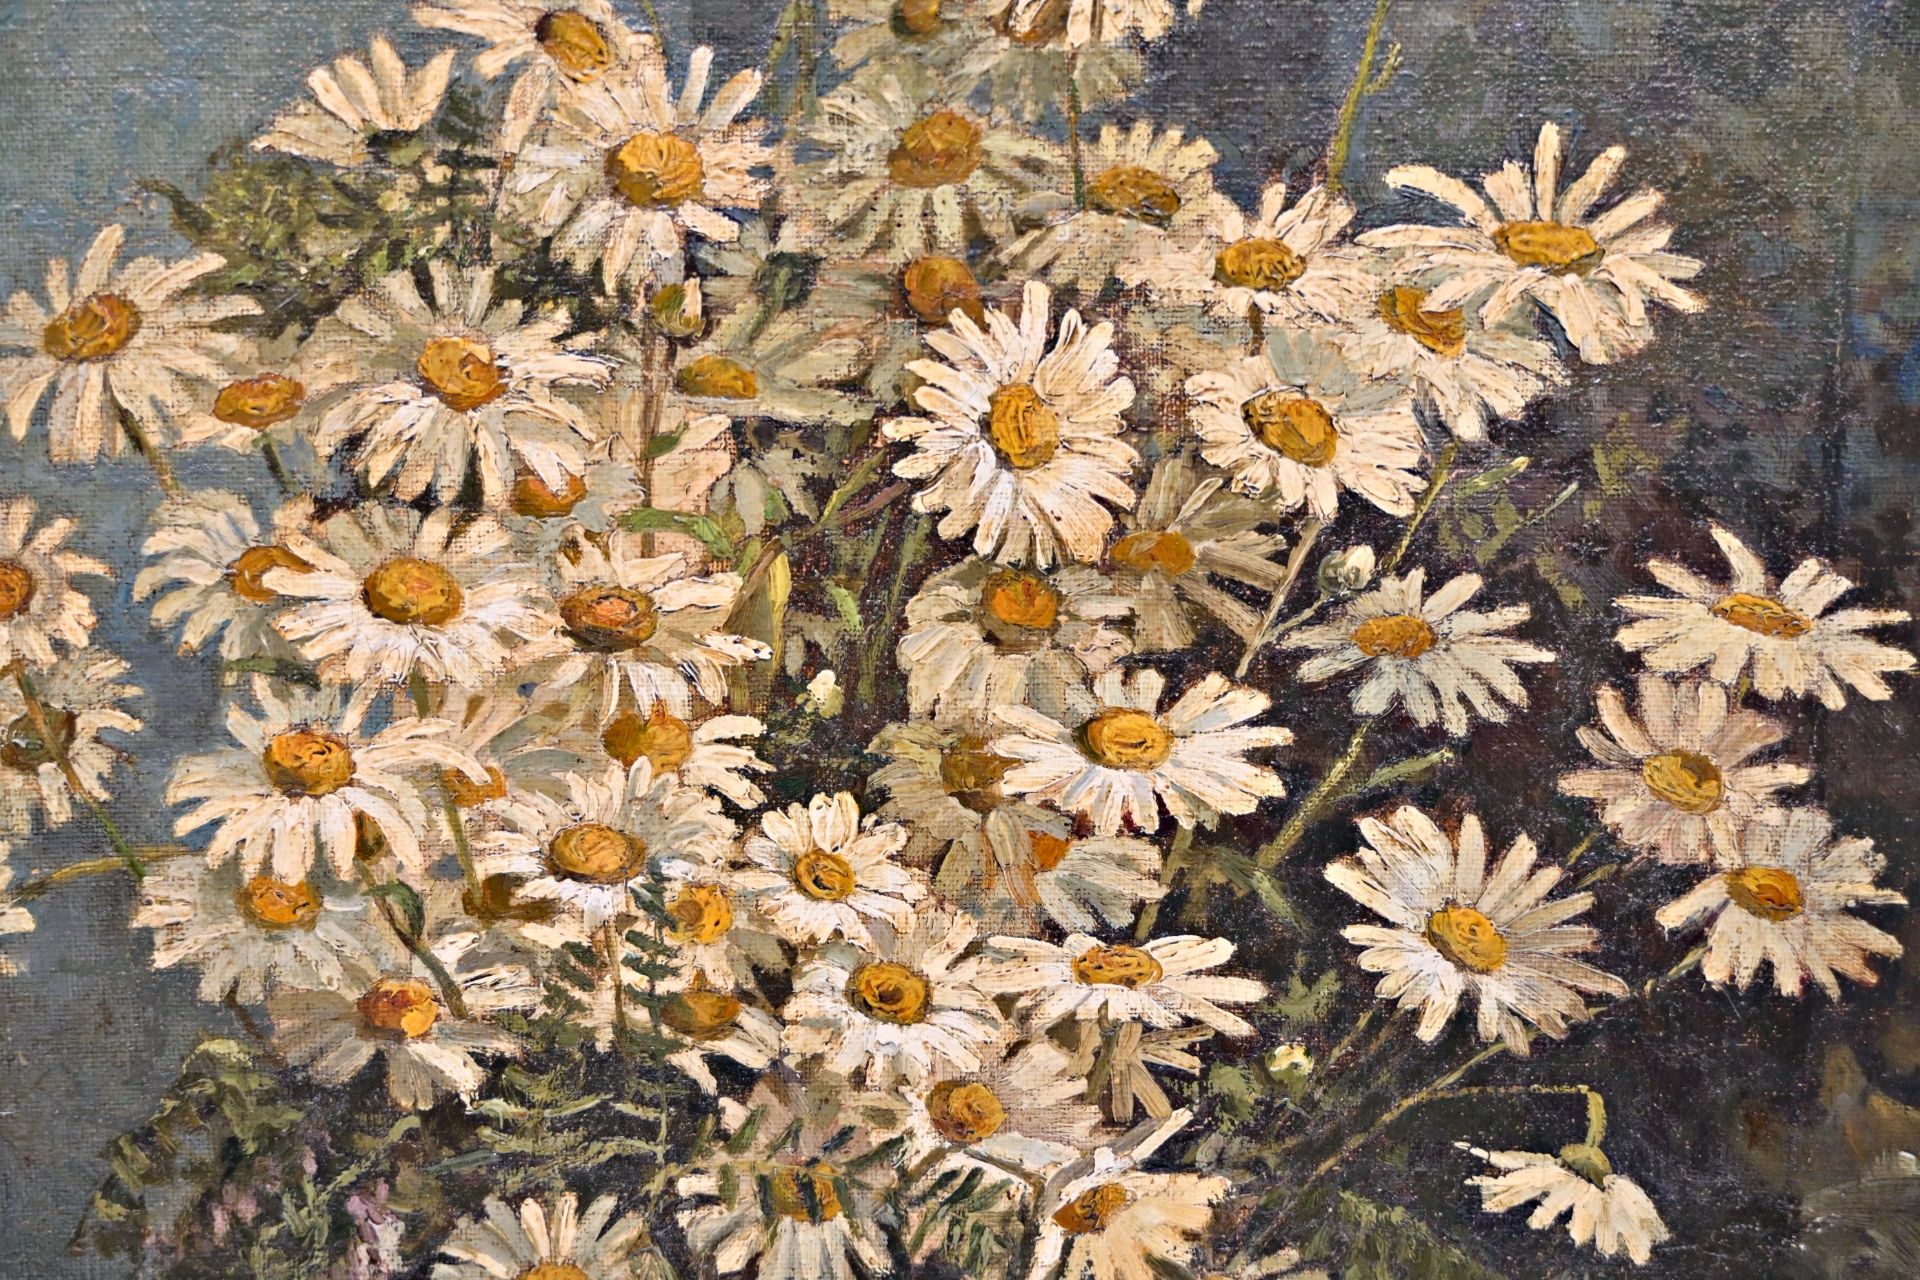 SOFIA KUVSHINNIKOVA (1847-1907). Still life with daisies, oil on canvas, signature and date illegibl - Image 3 of 6